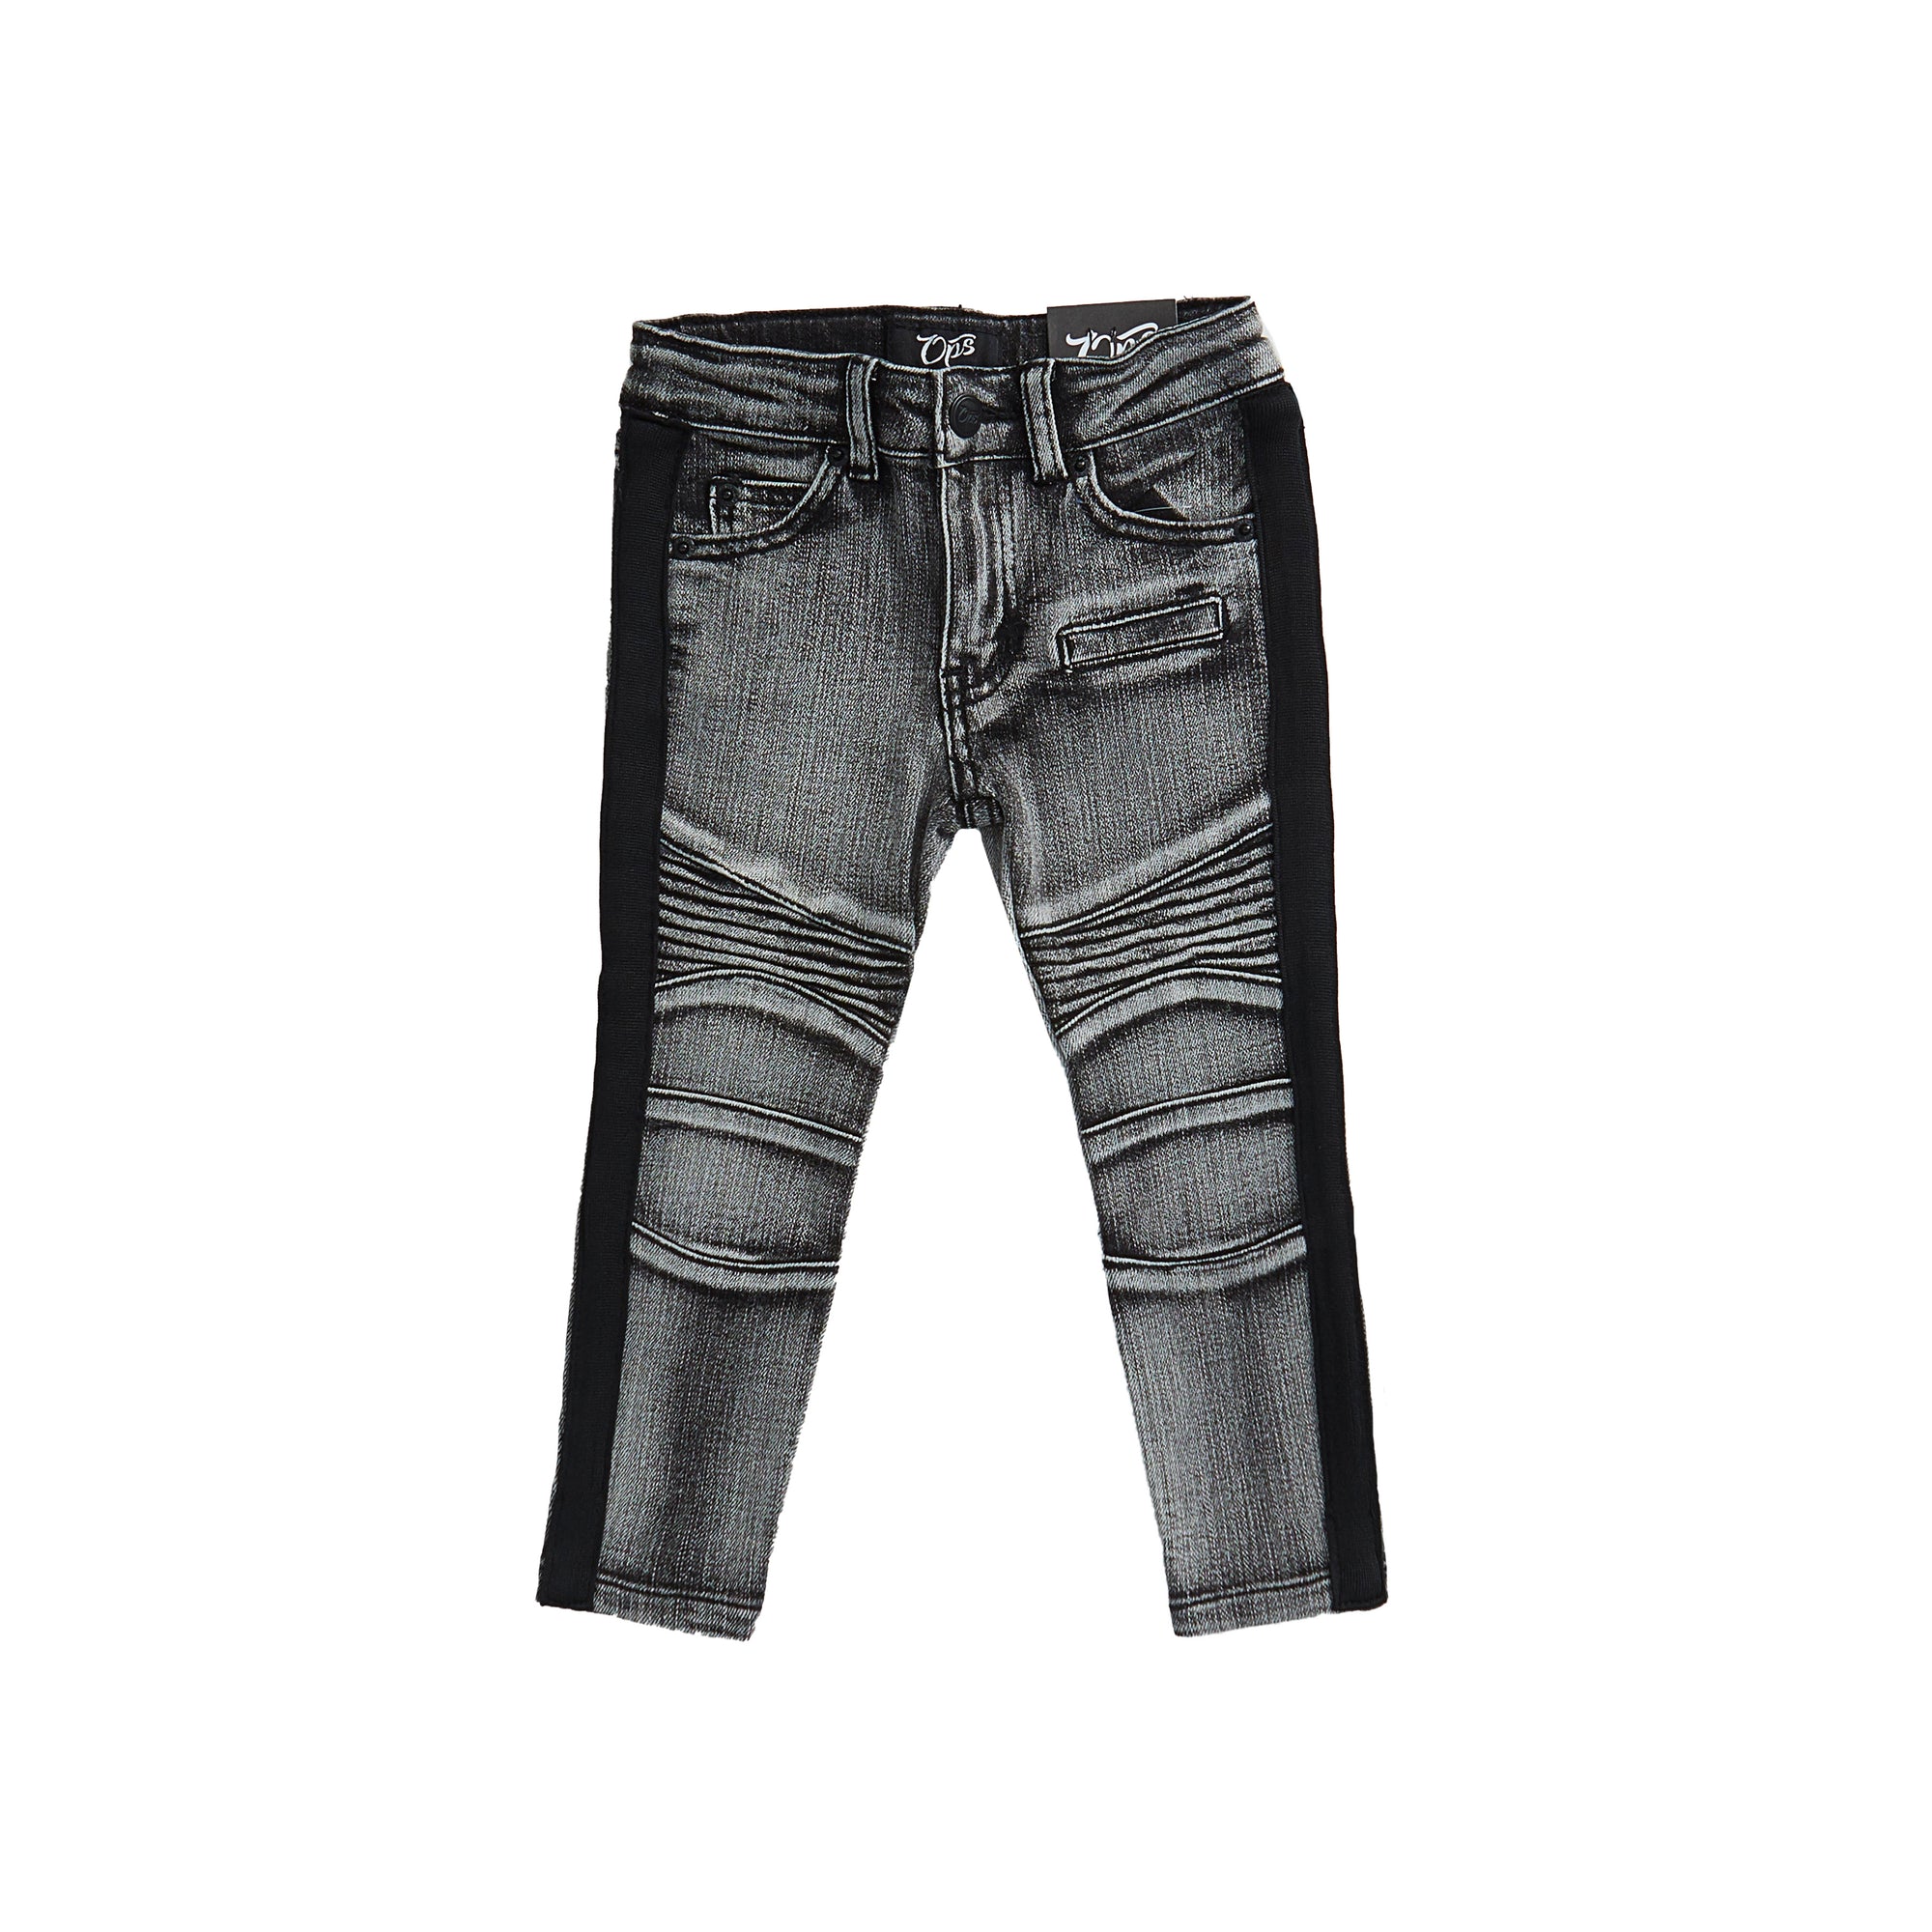 Premium Striped Moto Jean Pants (Washed Black/Black)